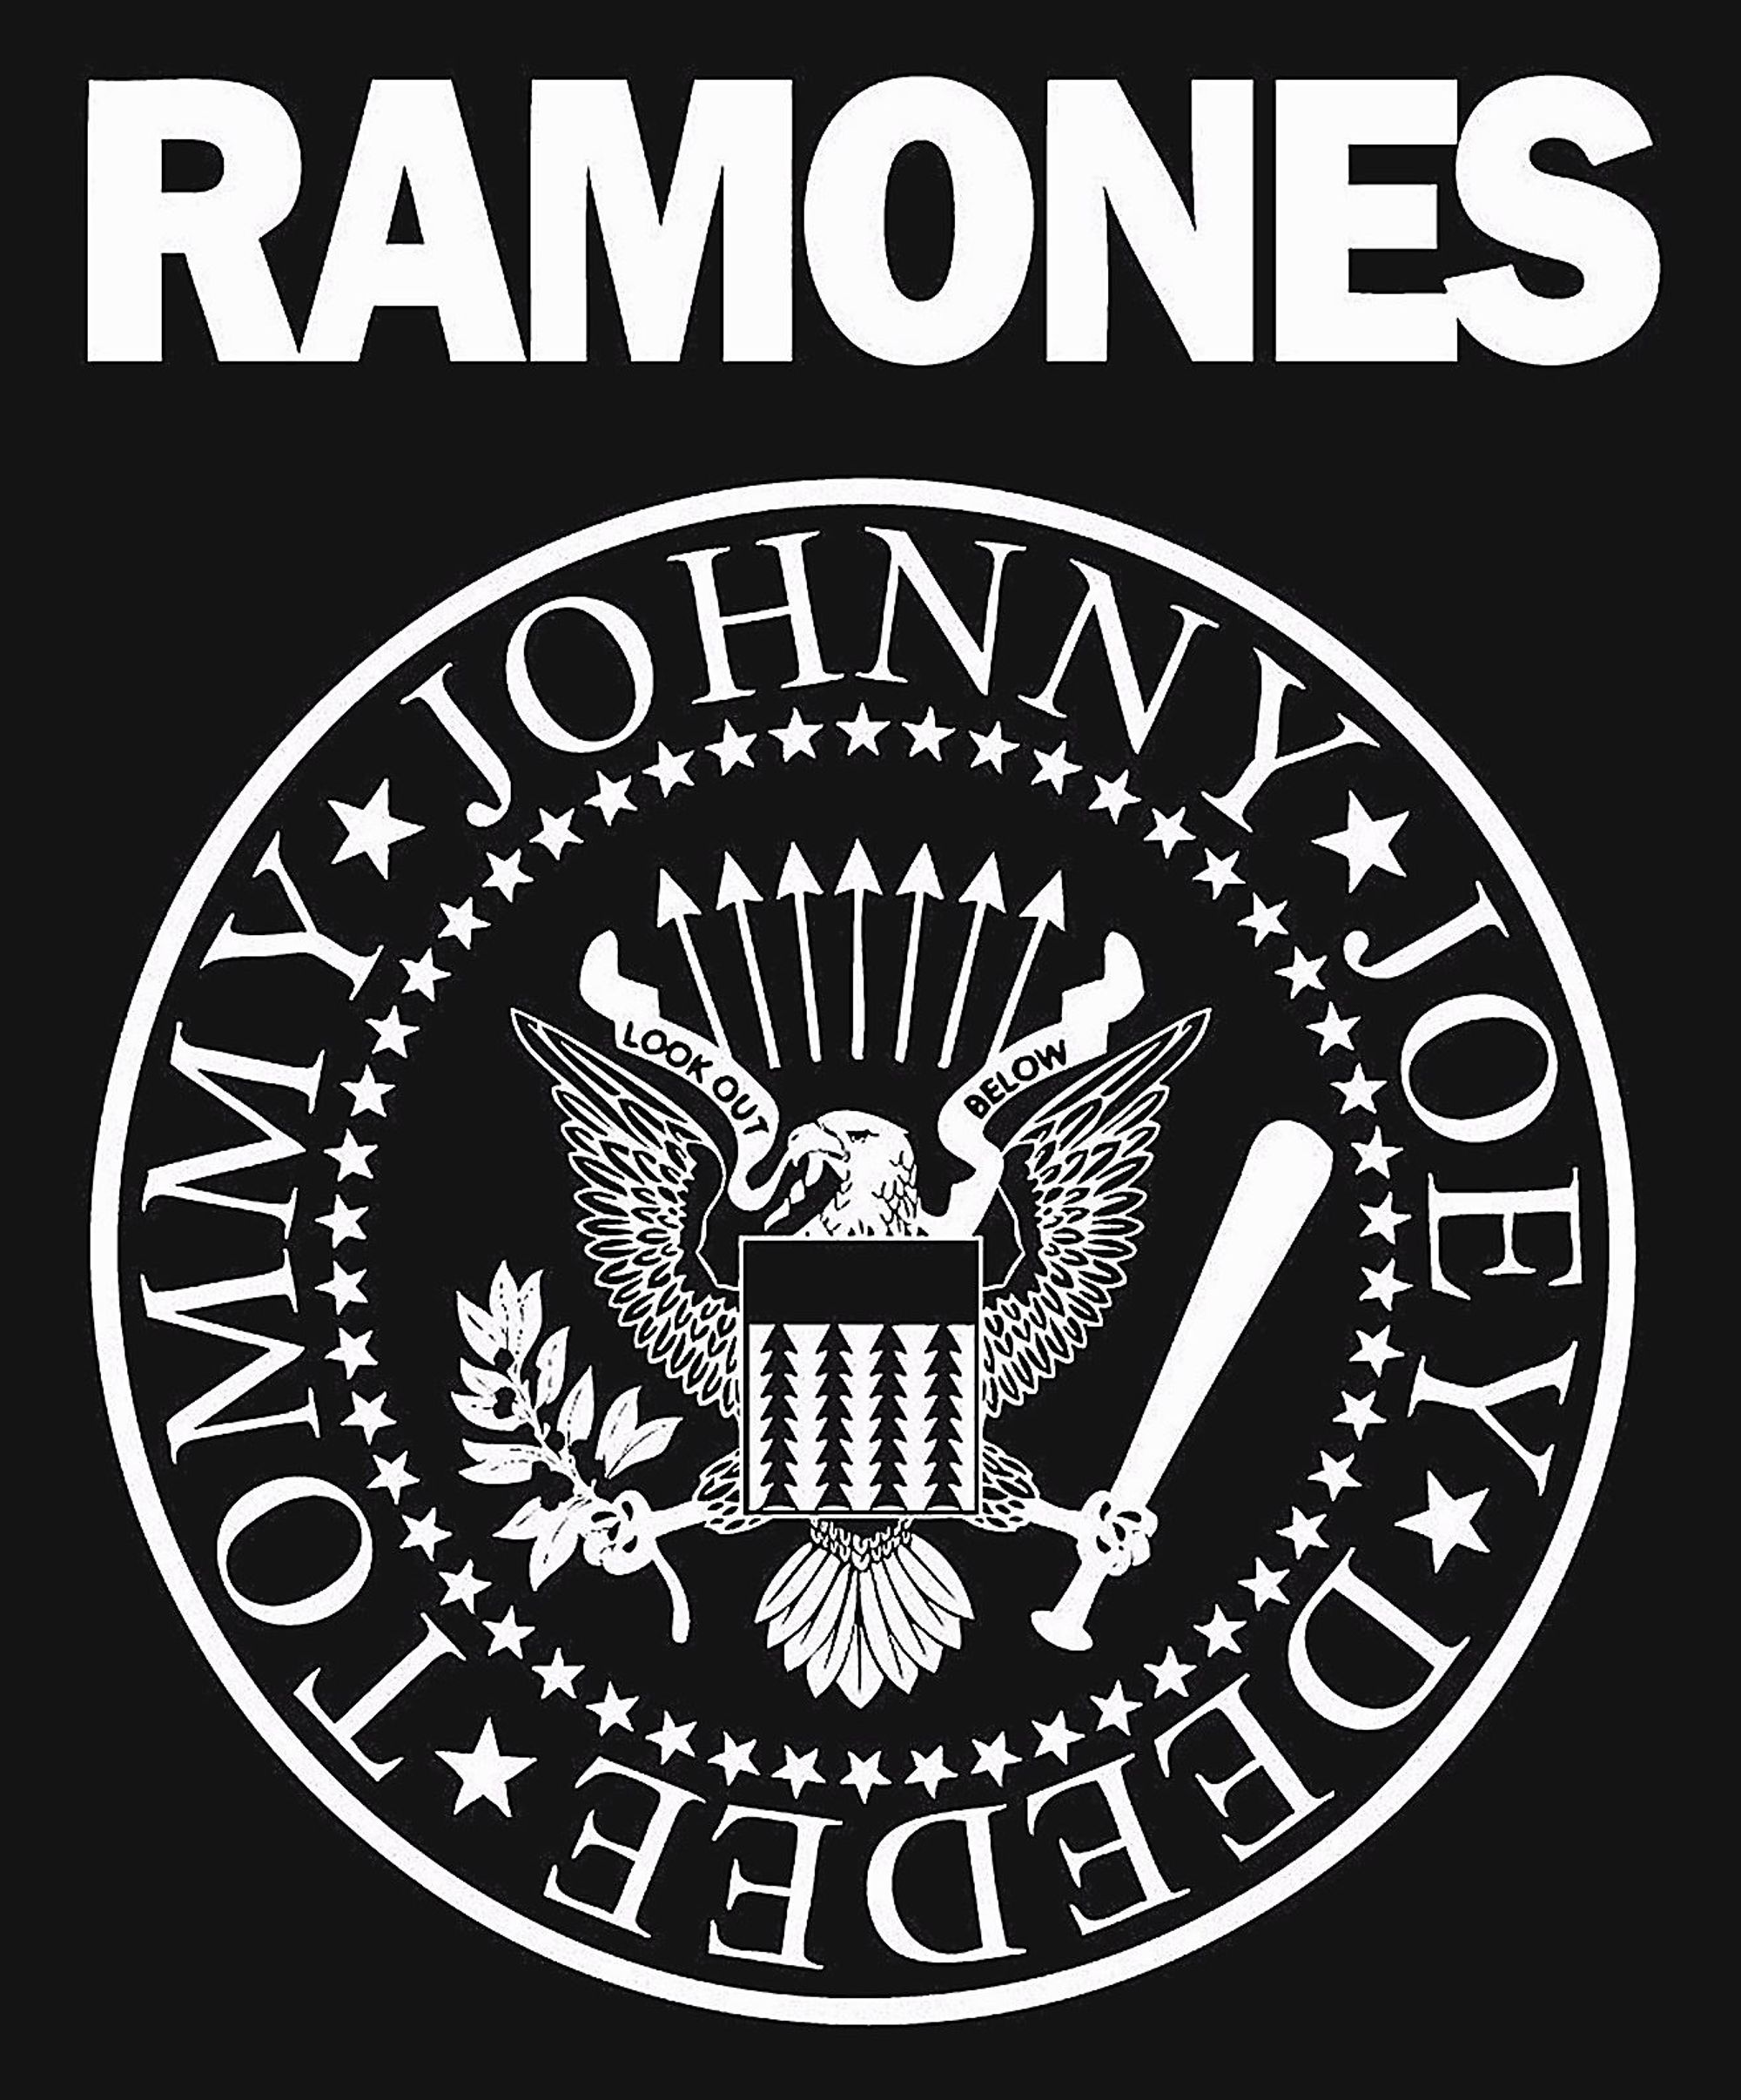 Ramones Logo by Arturo Vega